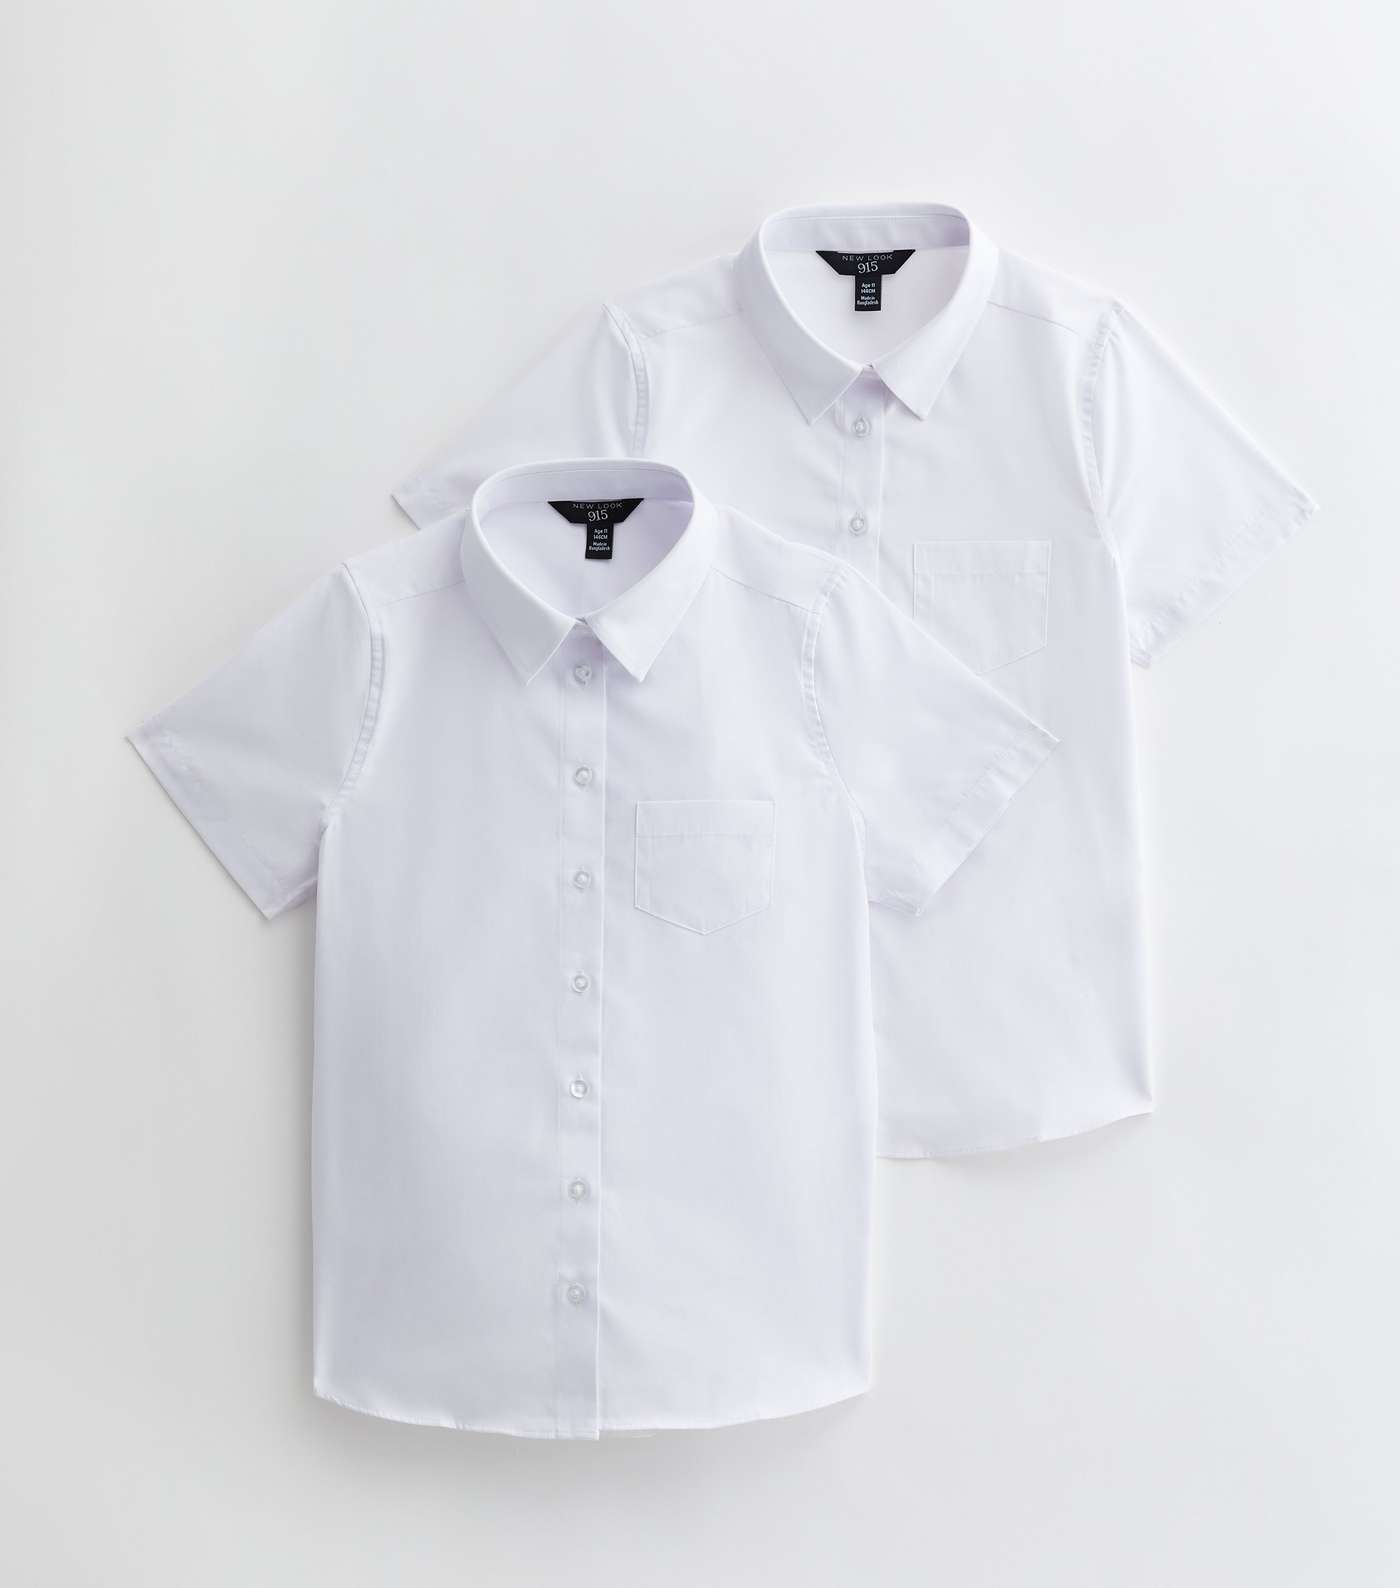 Girls 2 Pack White Short Sleeve Slim Fit School Shirts Image 5